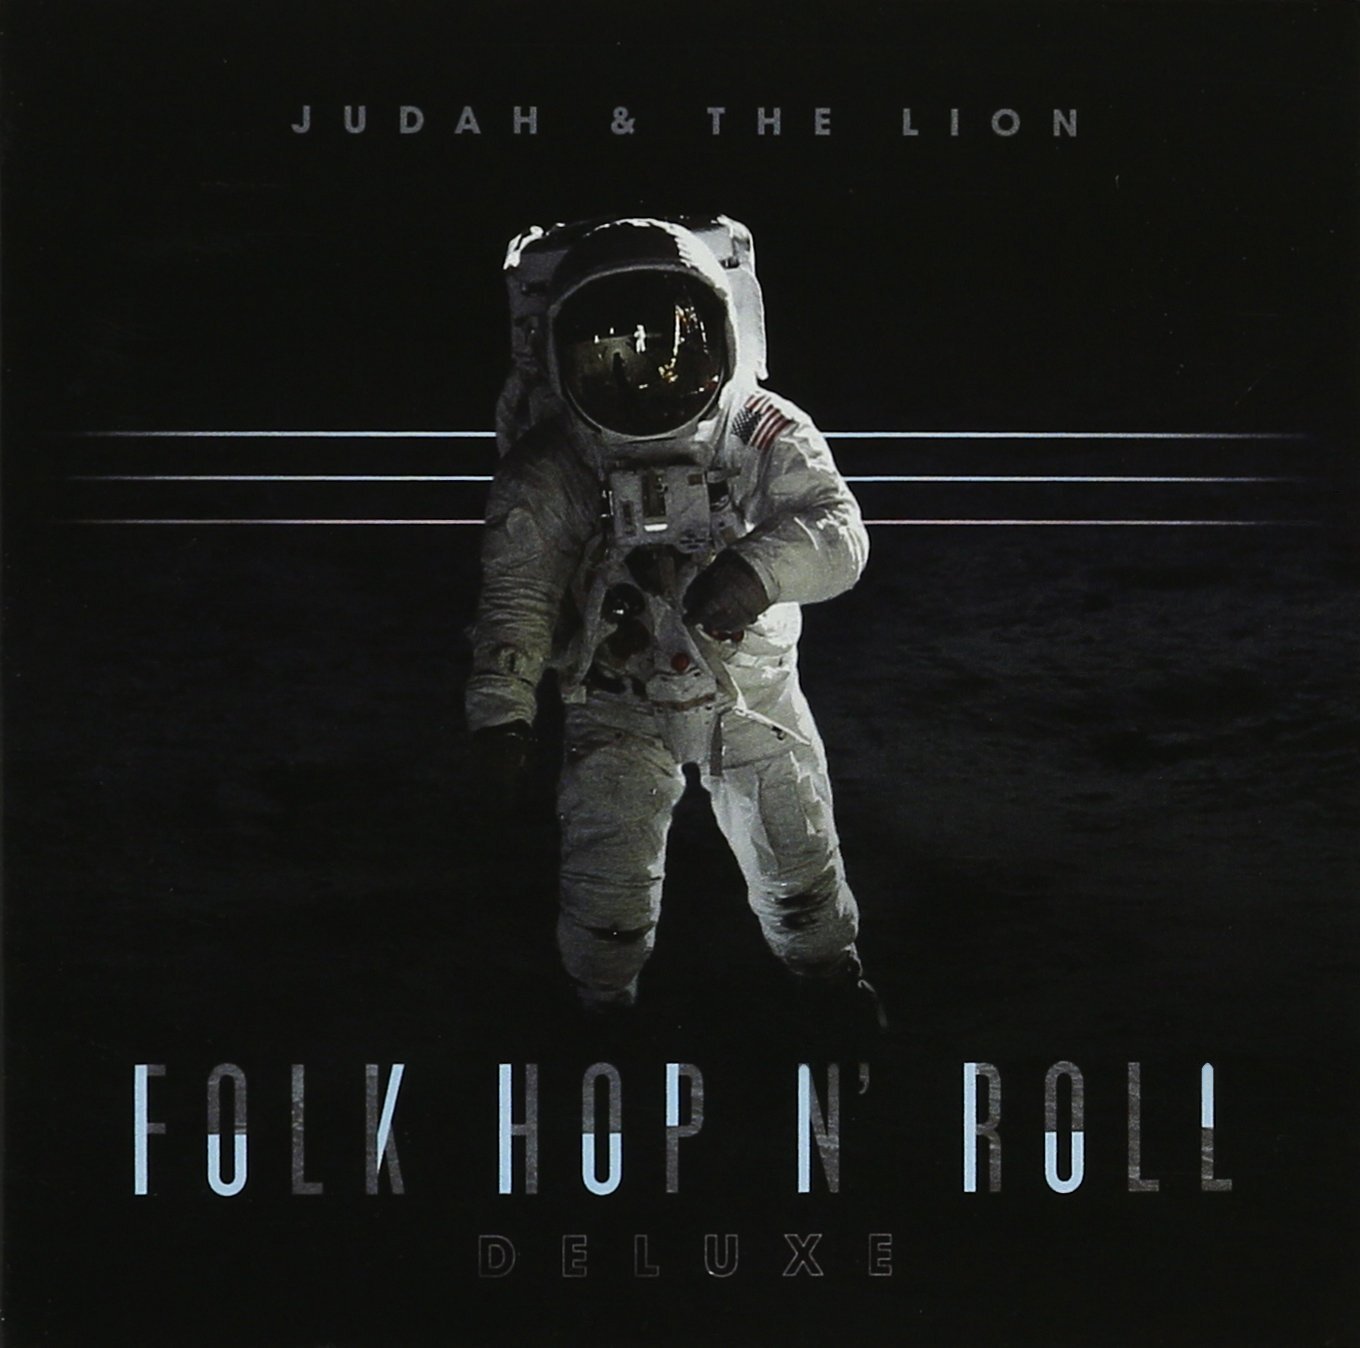 Judah and the Lion Folk Hop N Roll Deluxe brightmanmusic.com.jpg